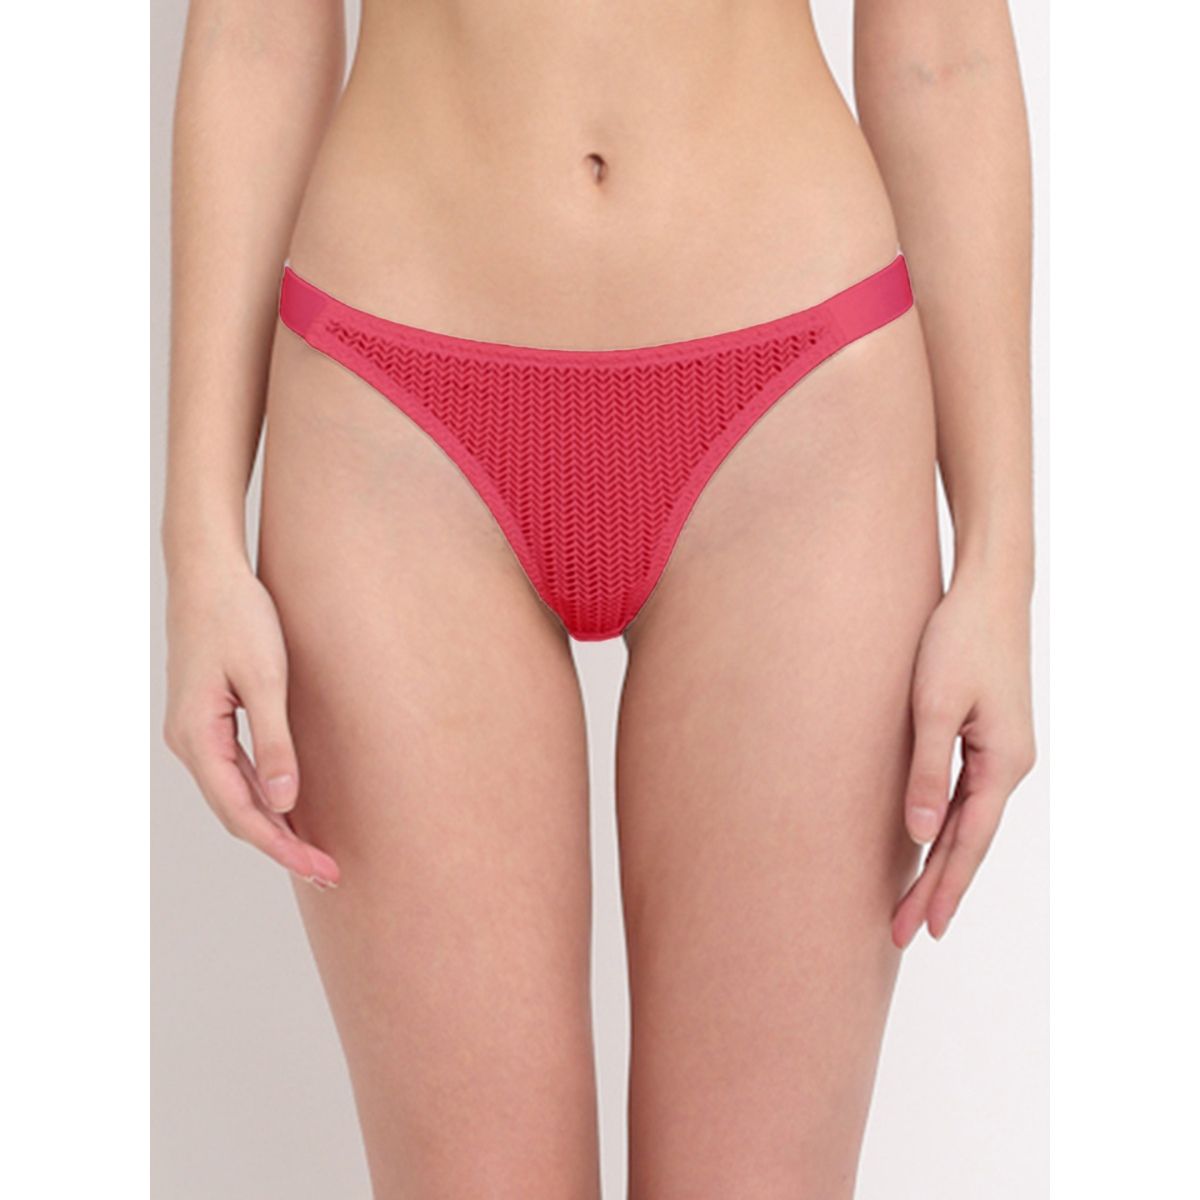 Buy Pink Women Briefs Thongs online in India